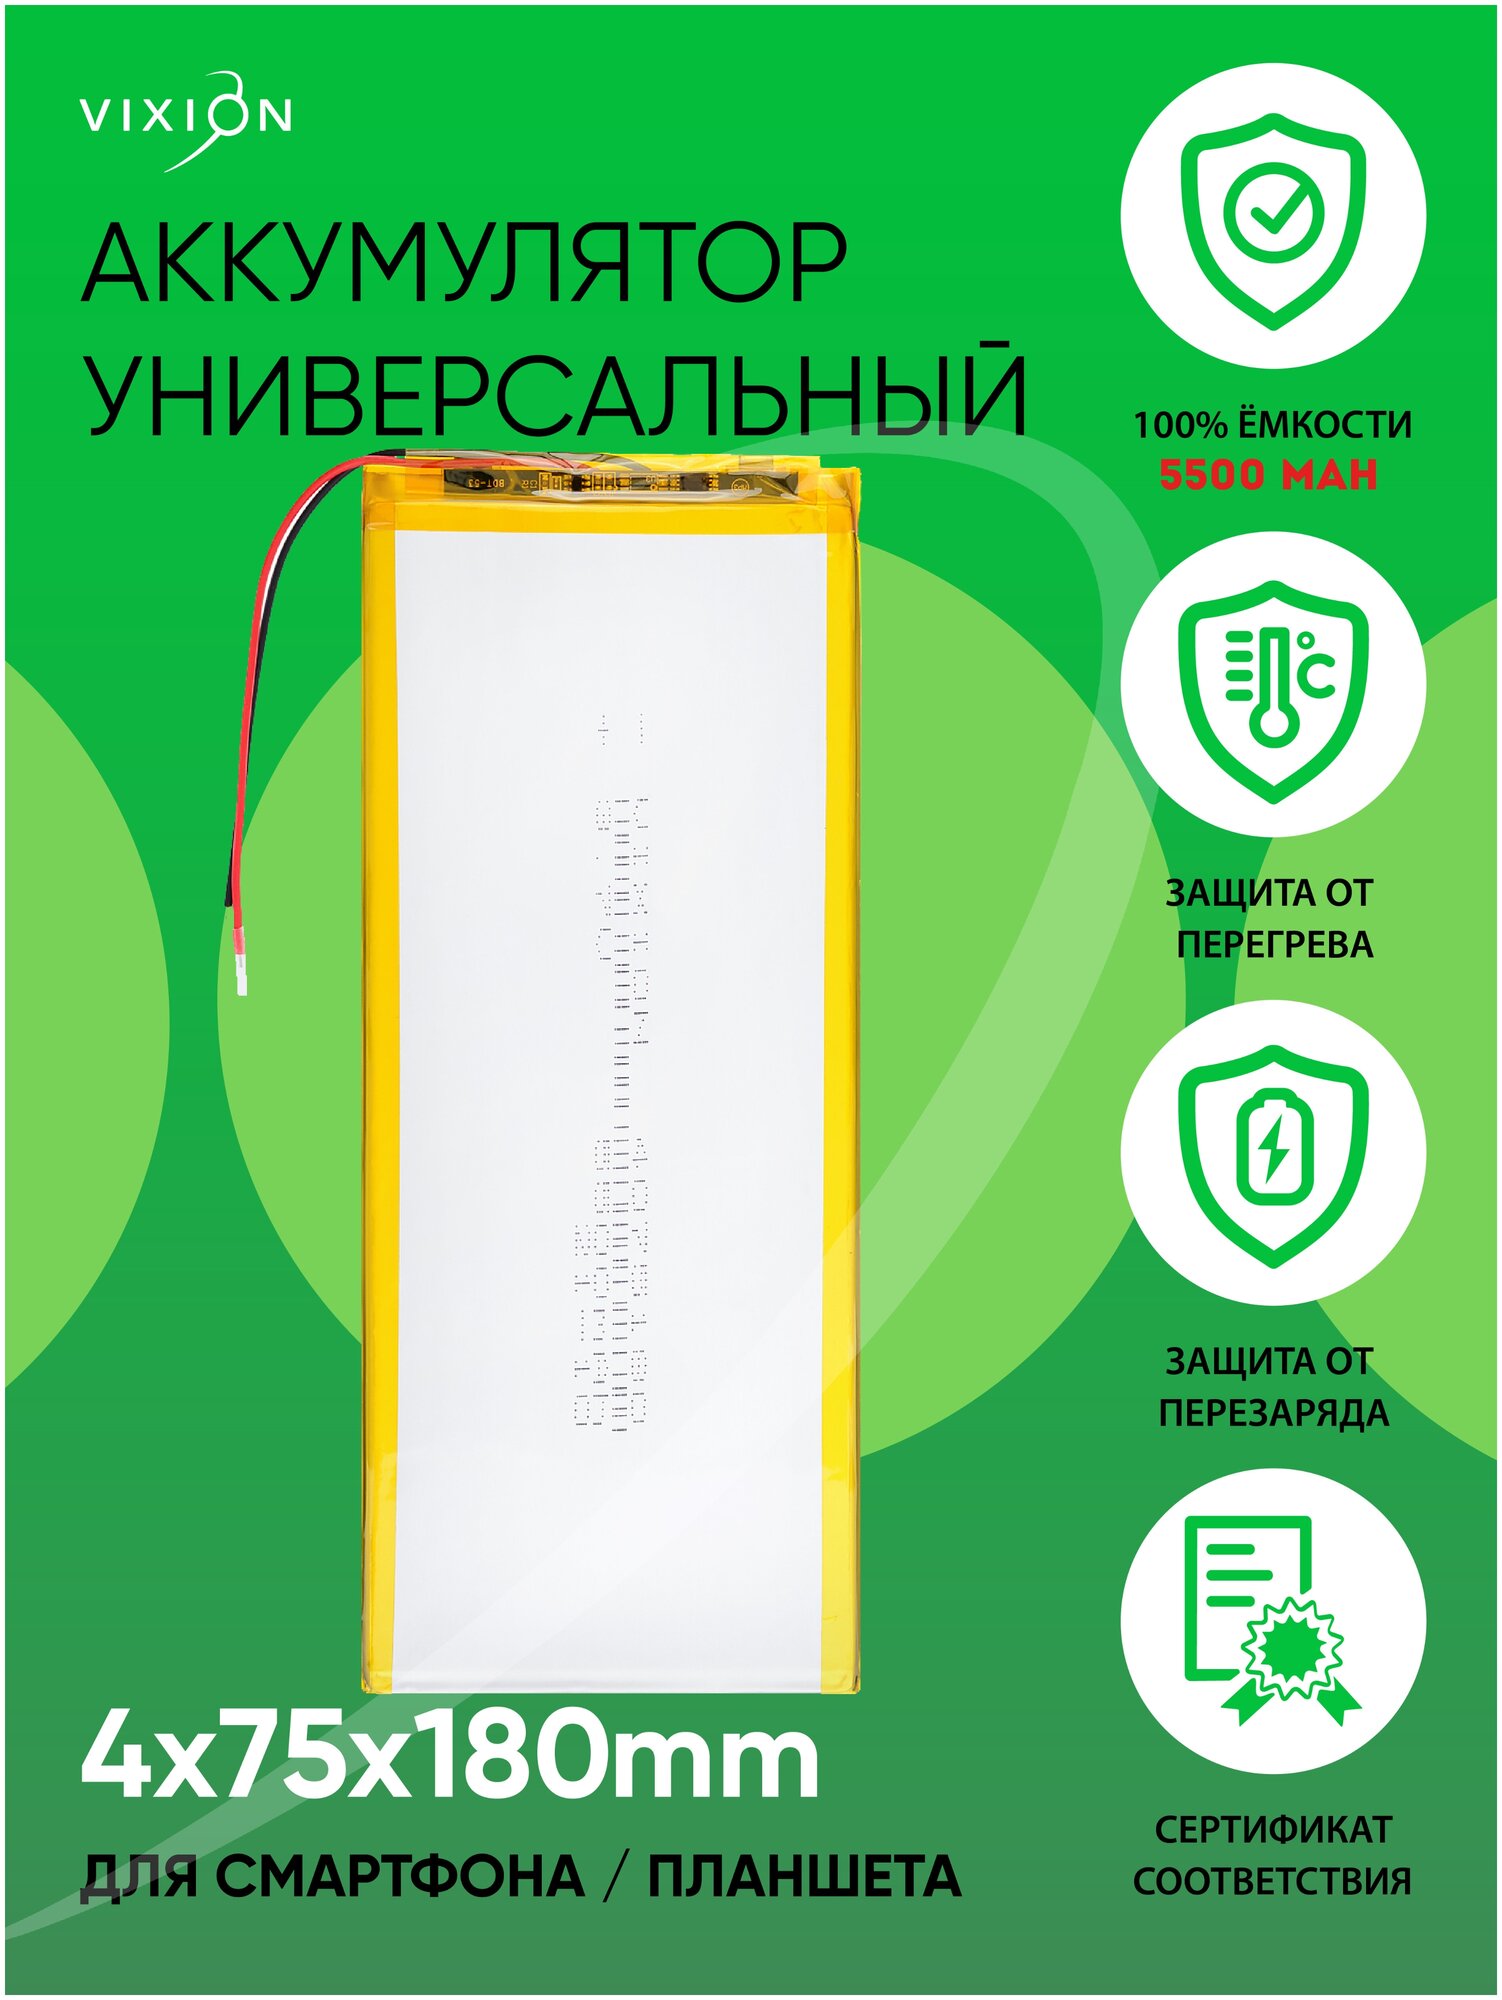 Аккумулятор для планшета / телефона  батарея универсальная 4x75x180 mm / 5500mAh / 37V Li-Pol / Vixion